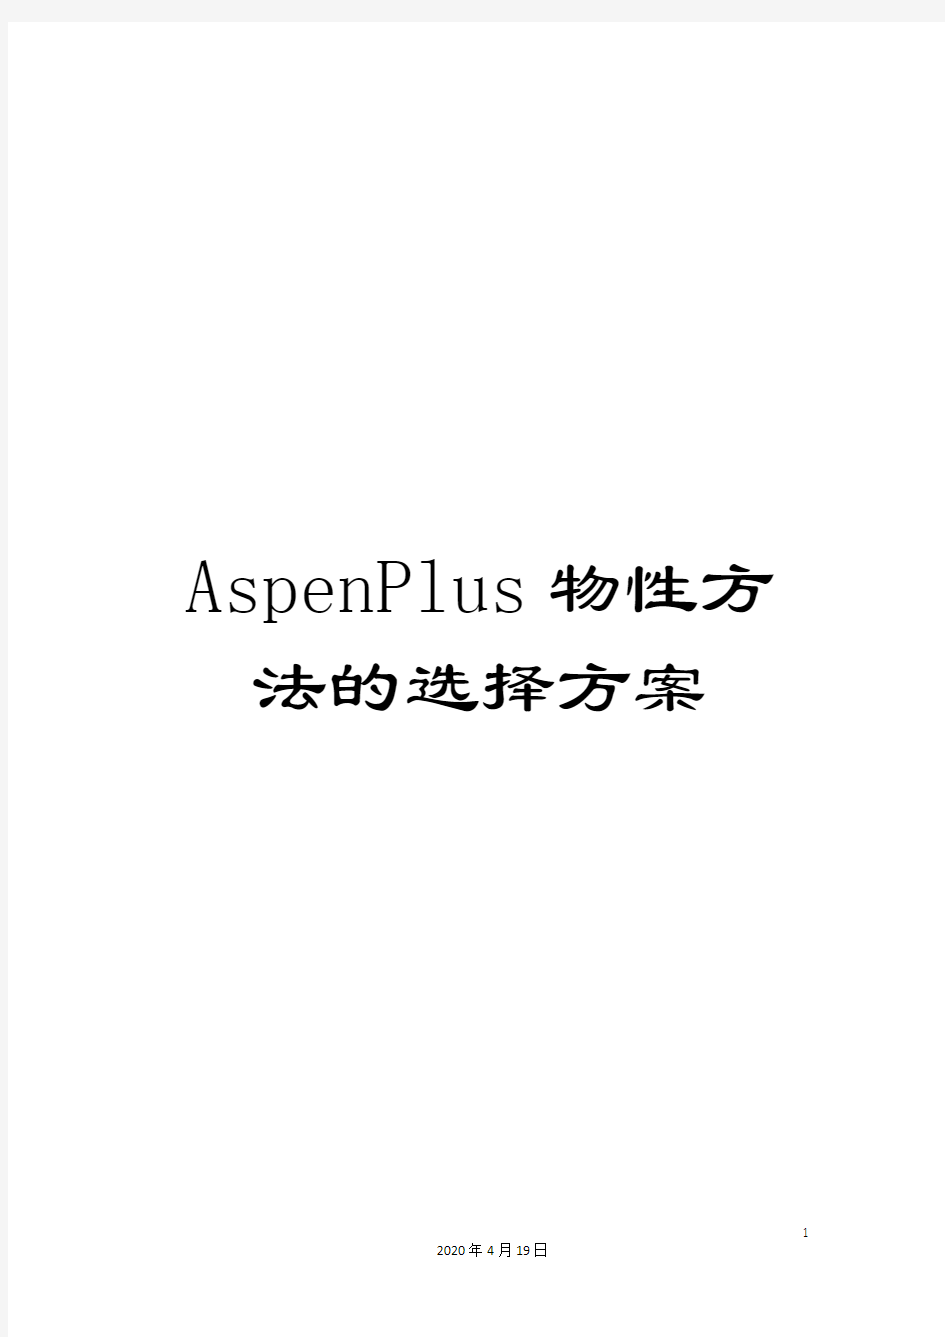 AspenPlus物性方法的选择方案